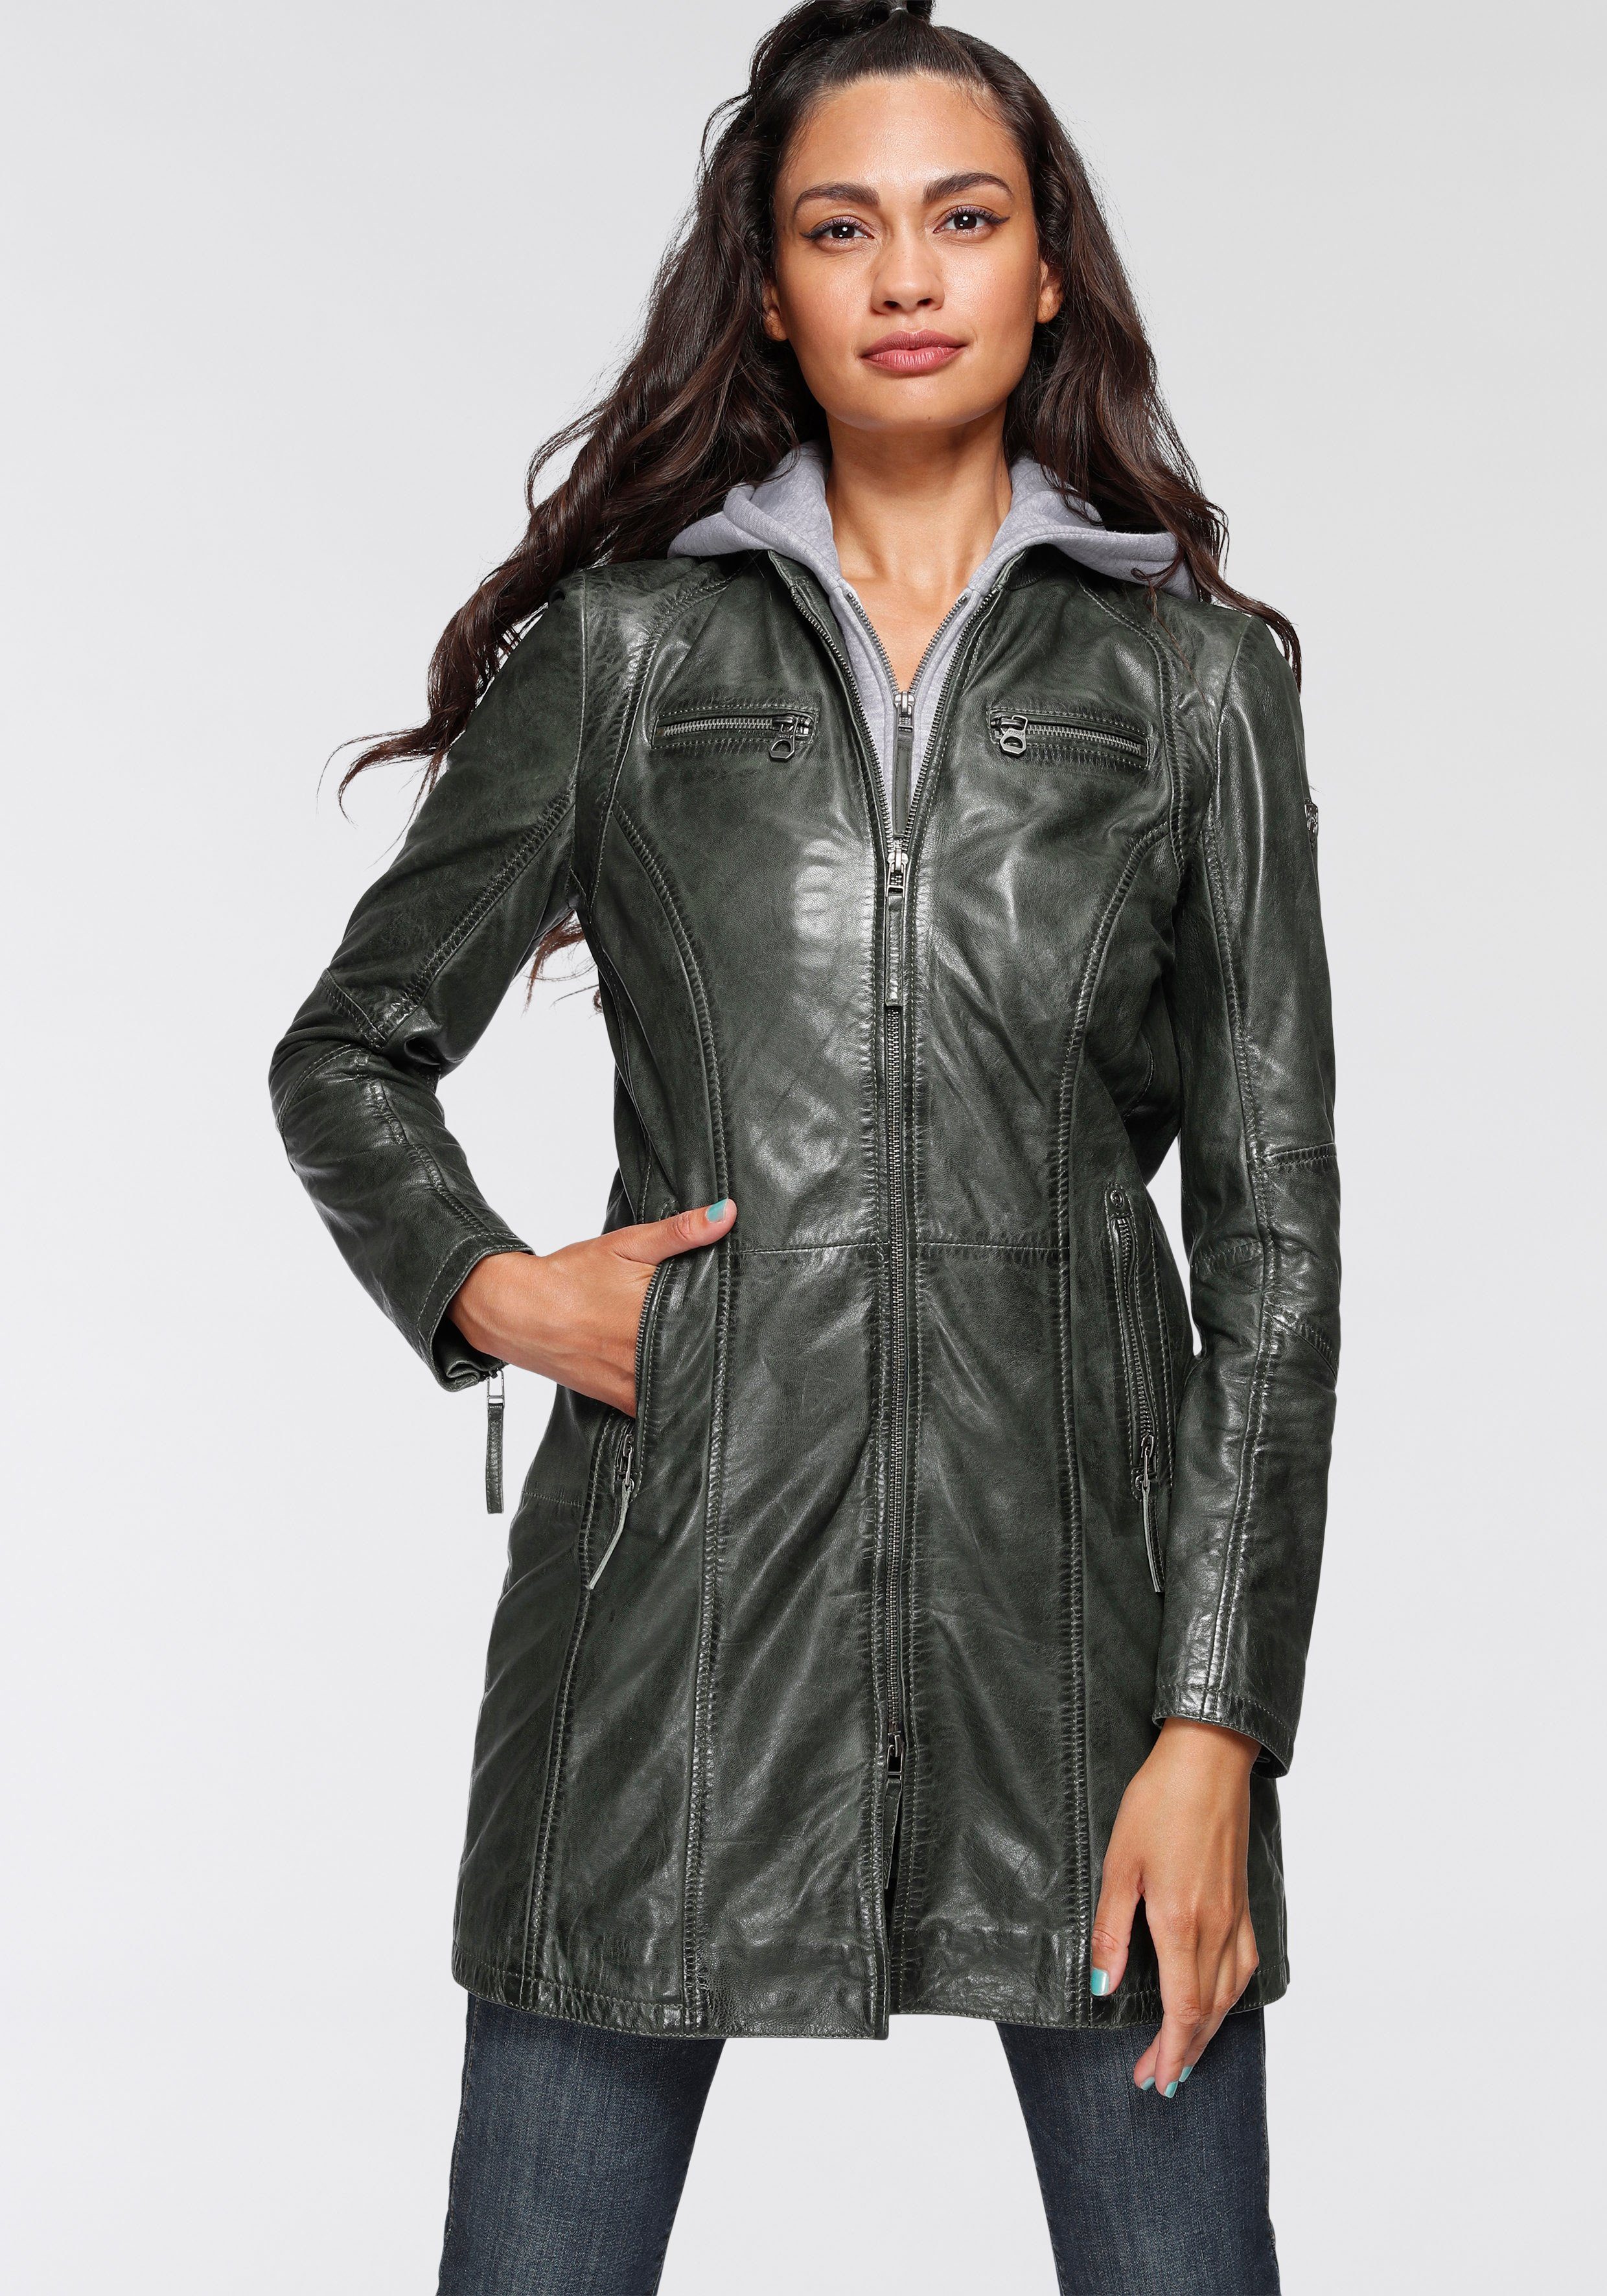 Gipsy Ledermantel »Bente« 2-in-1-Lederjacke mit abnehmbarem Kapuzen-Inlay  aus Jerseyqualität online kaufen | OTTO